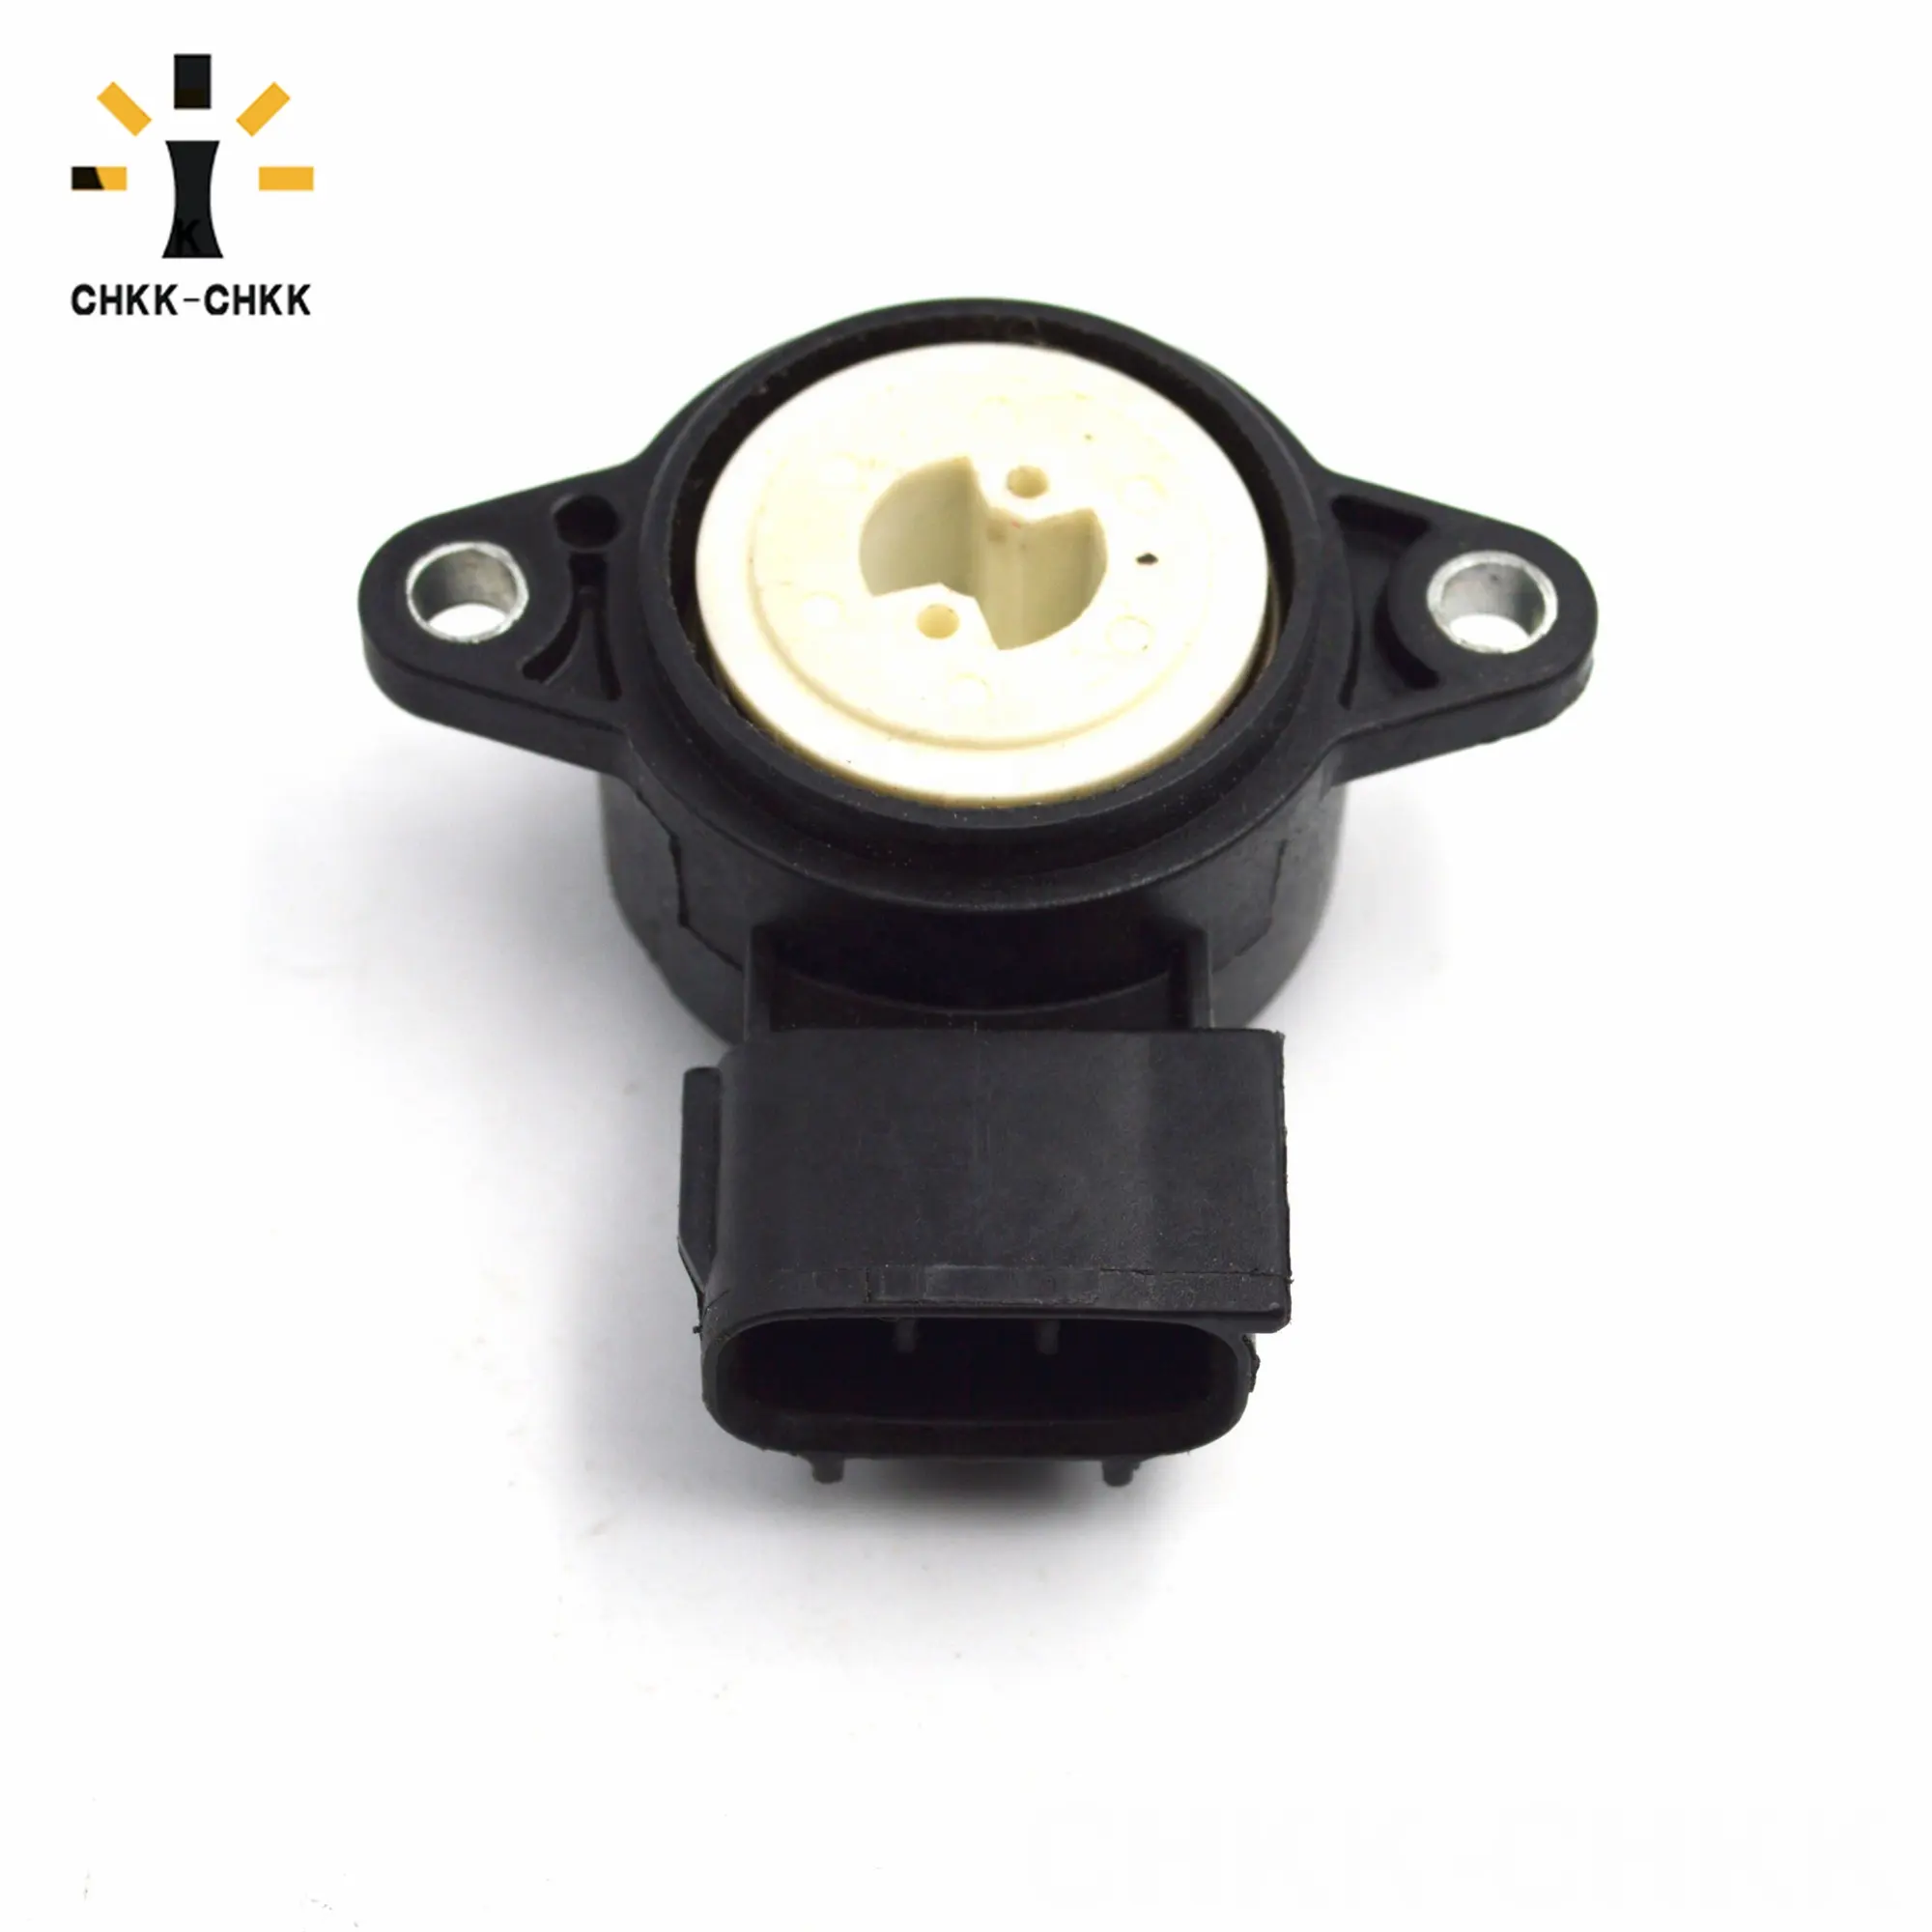 TPS Sensor Throttle Position Sensor For Toyota Camry RAV4 Solara For Lexus ES300 RX300 OEM 89452-06020 89452-0A010 89452-33030